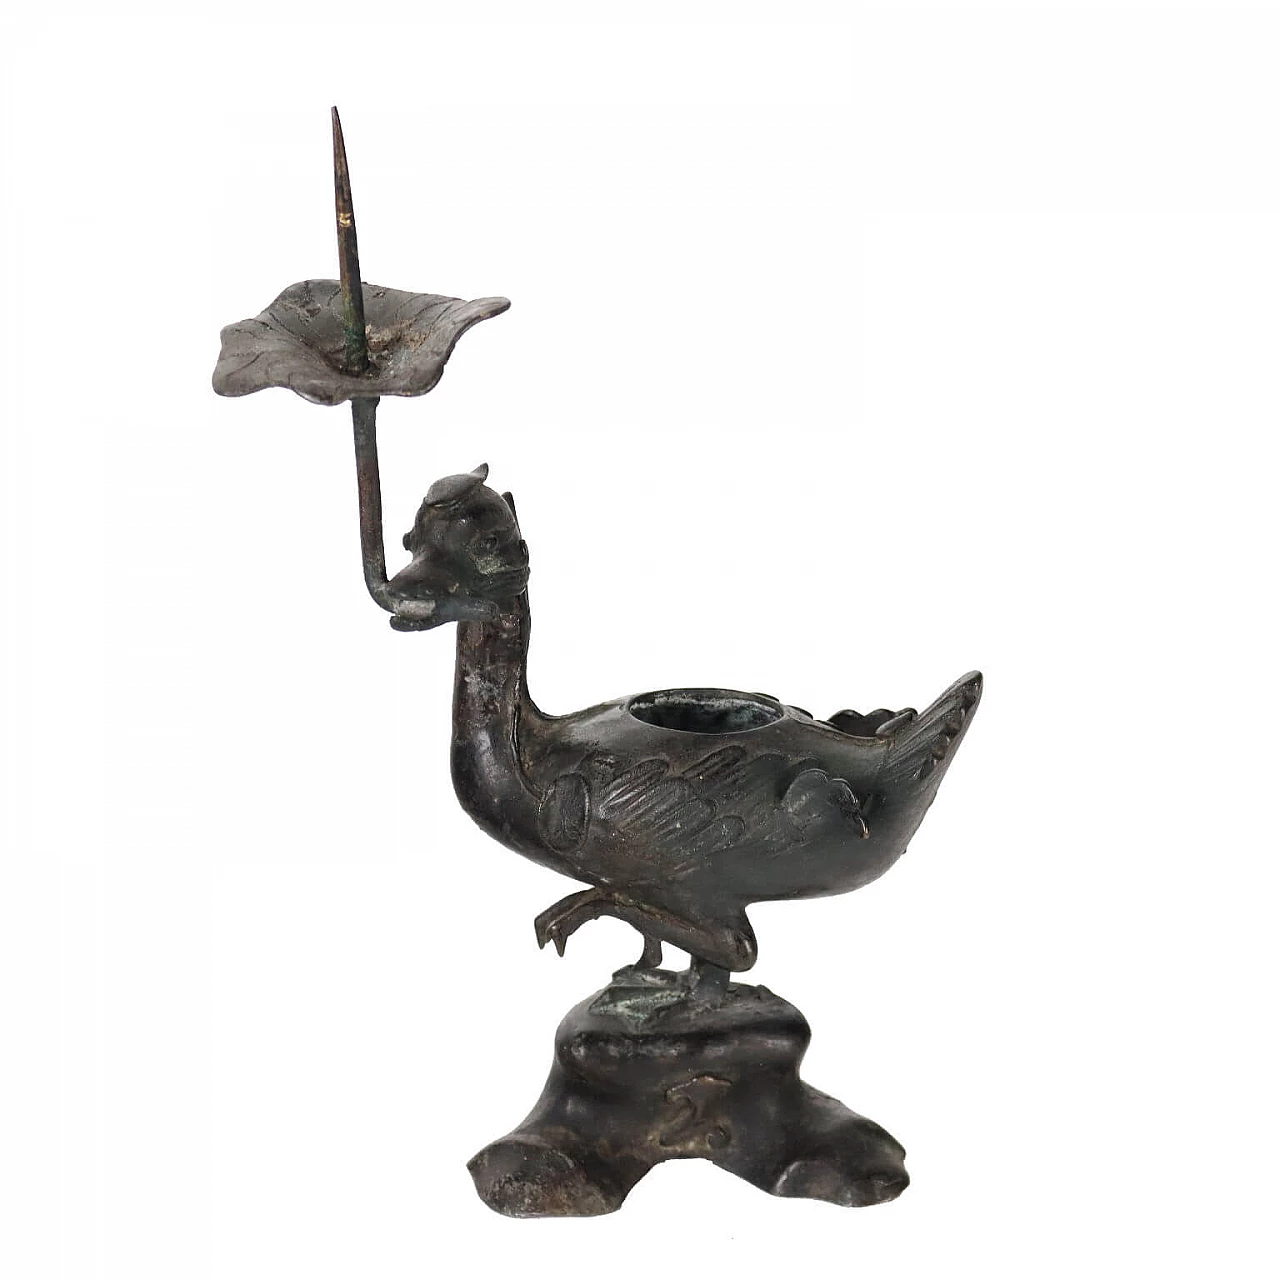 Portacandela cinese in bronzo con anatra, '700 1